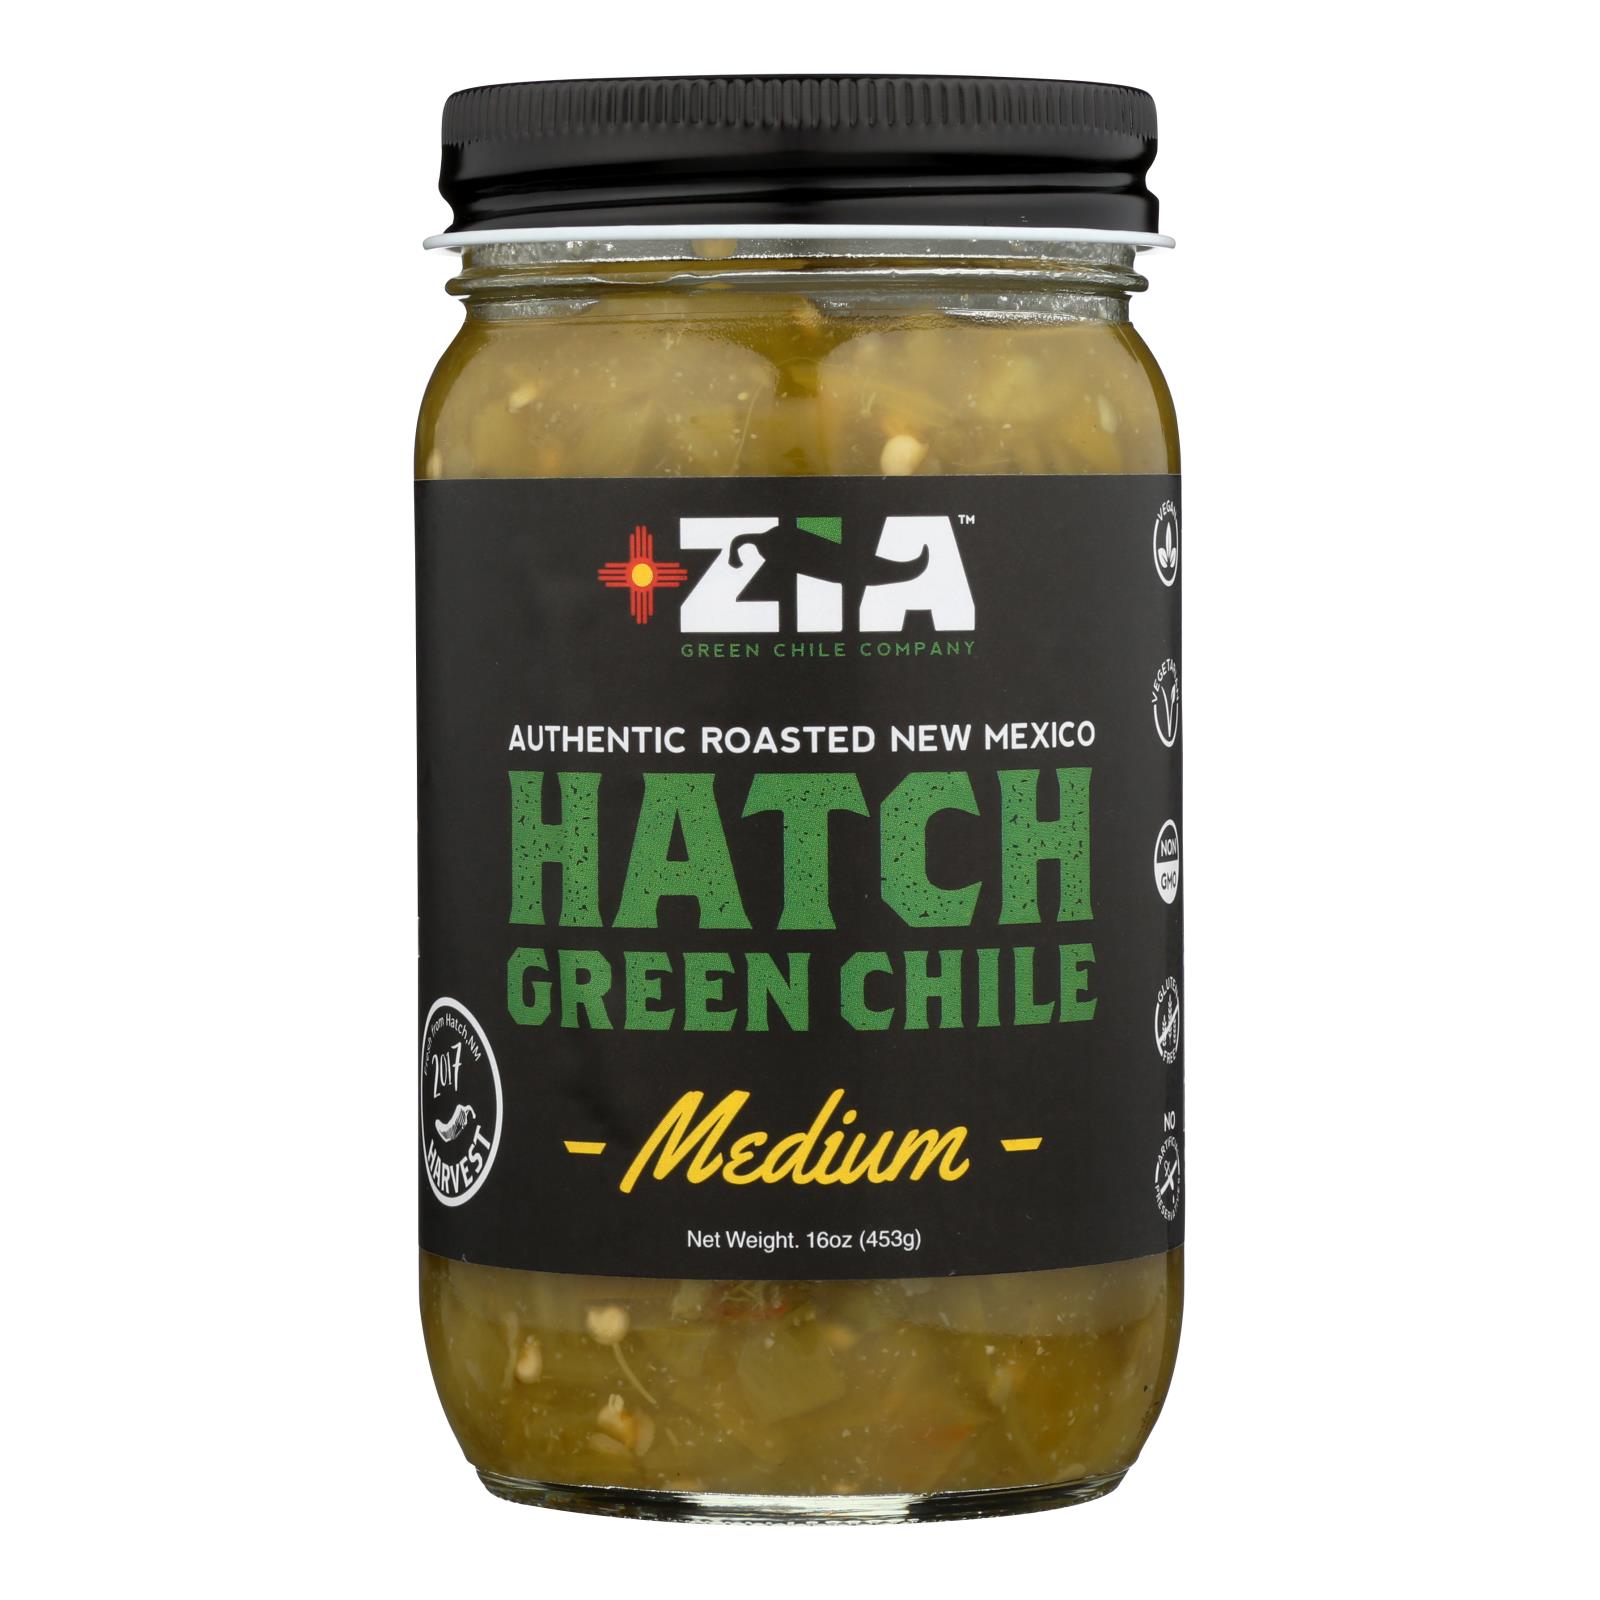 Zia Green Chile Company - Green Chile Medium Hatch - 6개 묶음상품 - 16 OZ